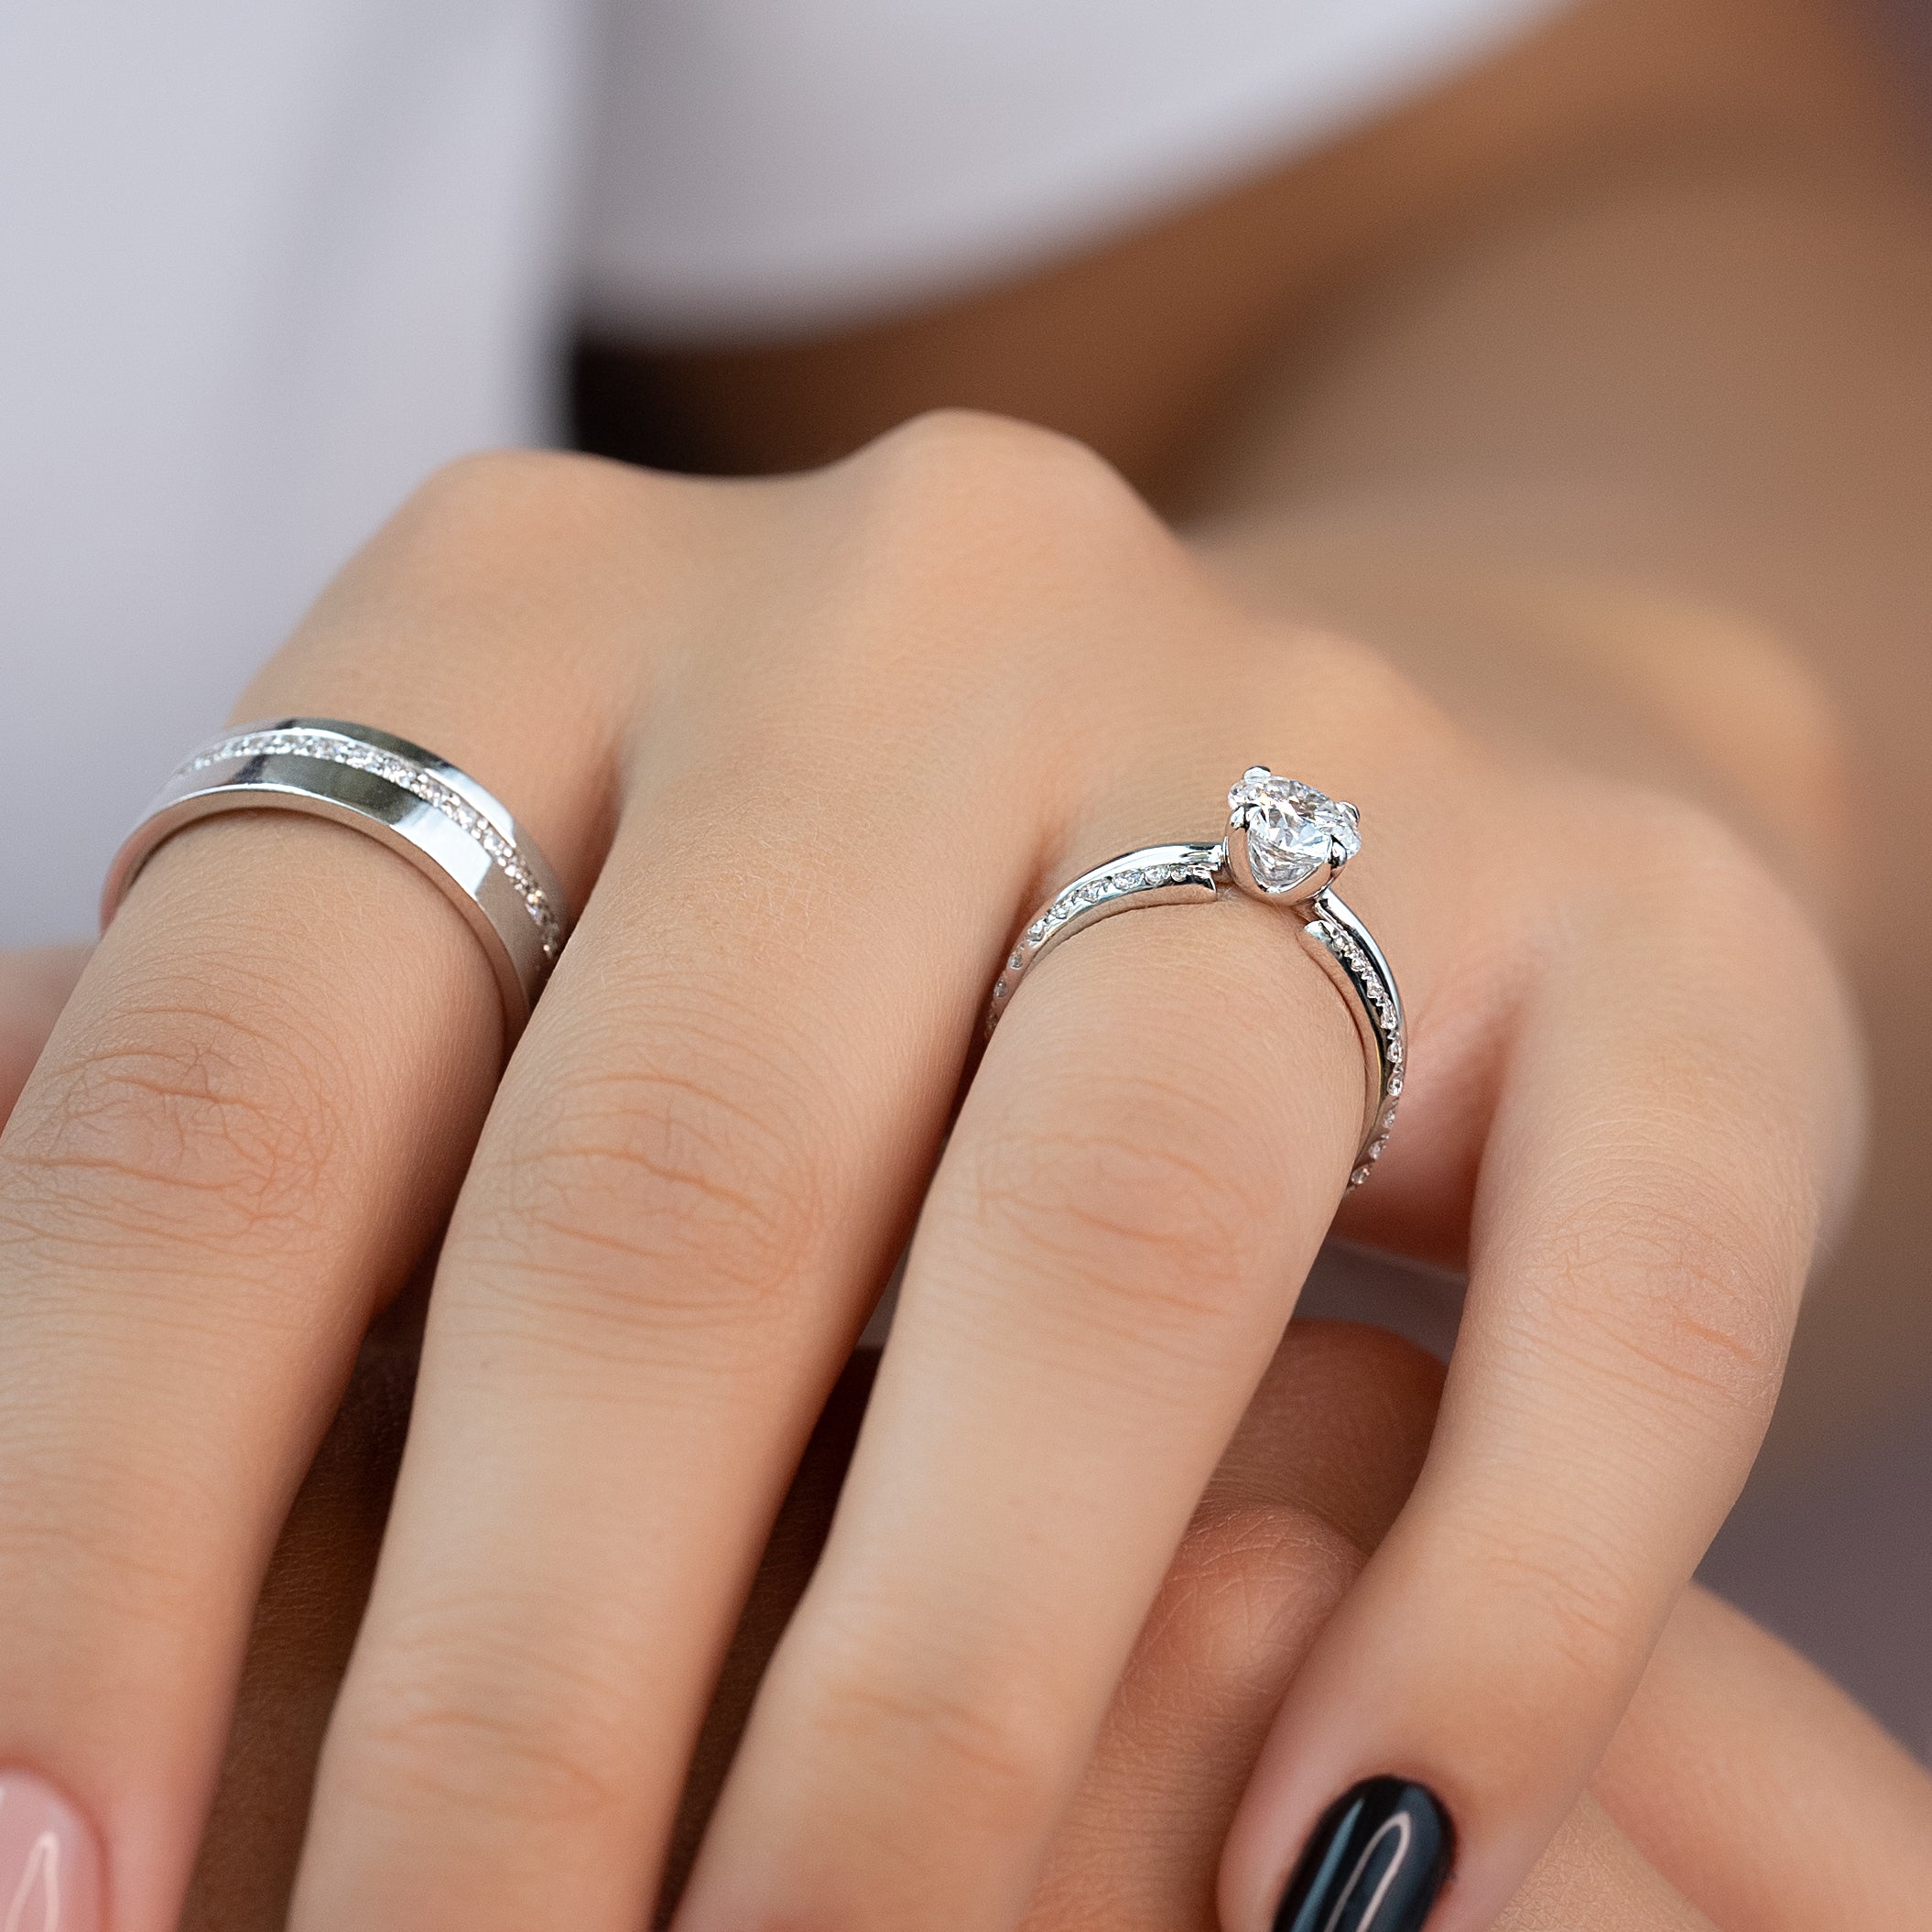 ashley+madekwe+engagement+ring | Rings, Wedding rings, Engagement rings